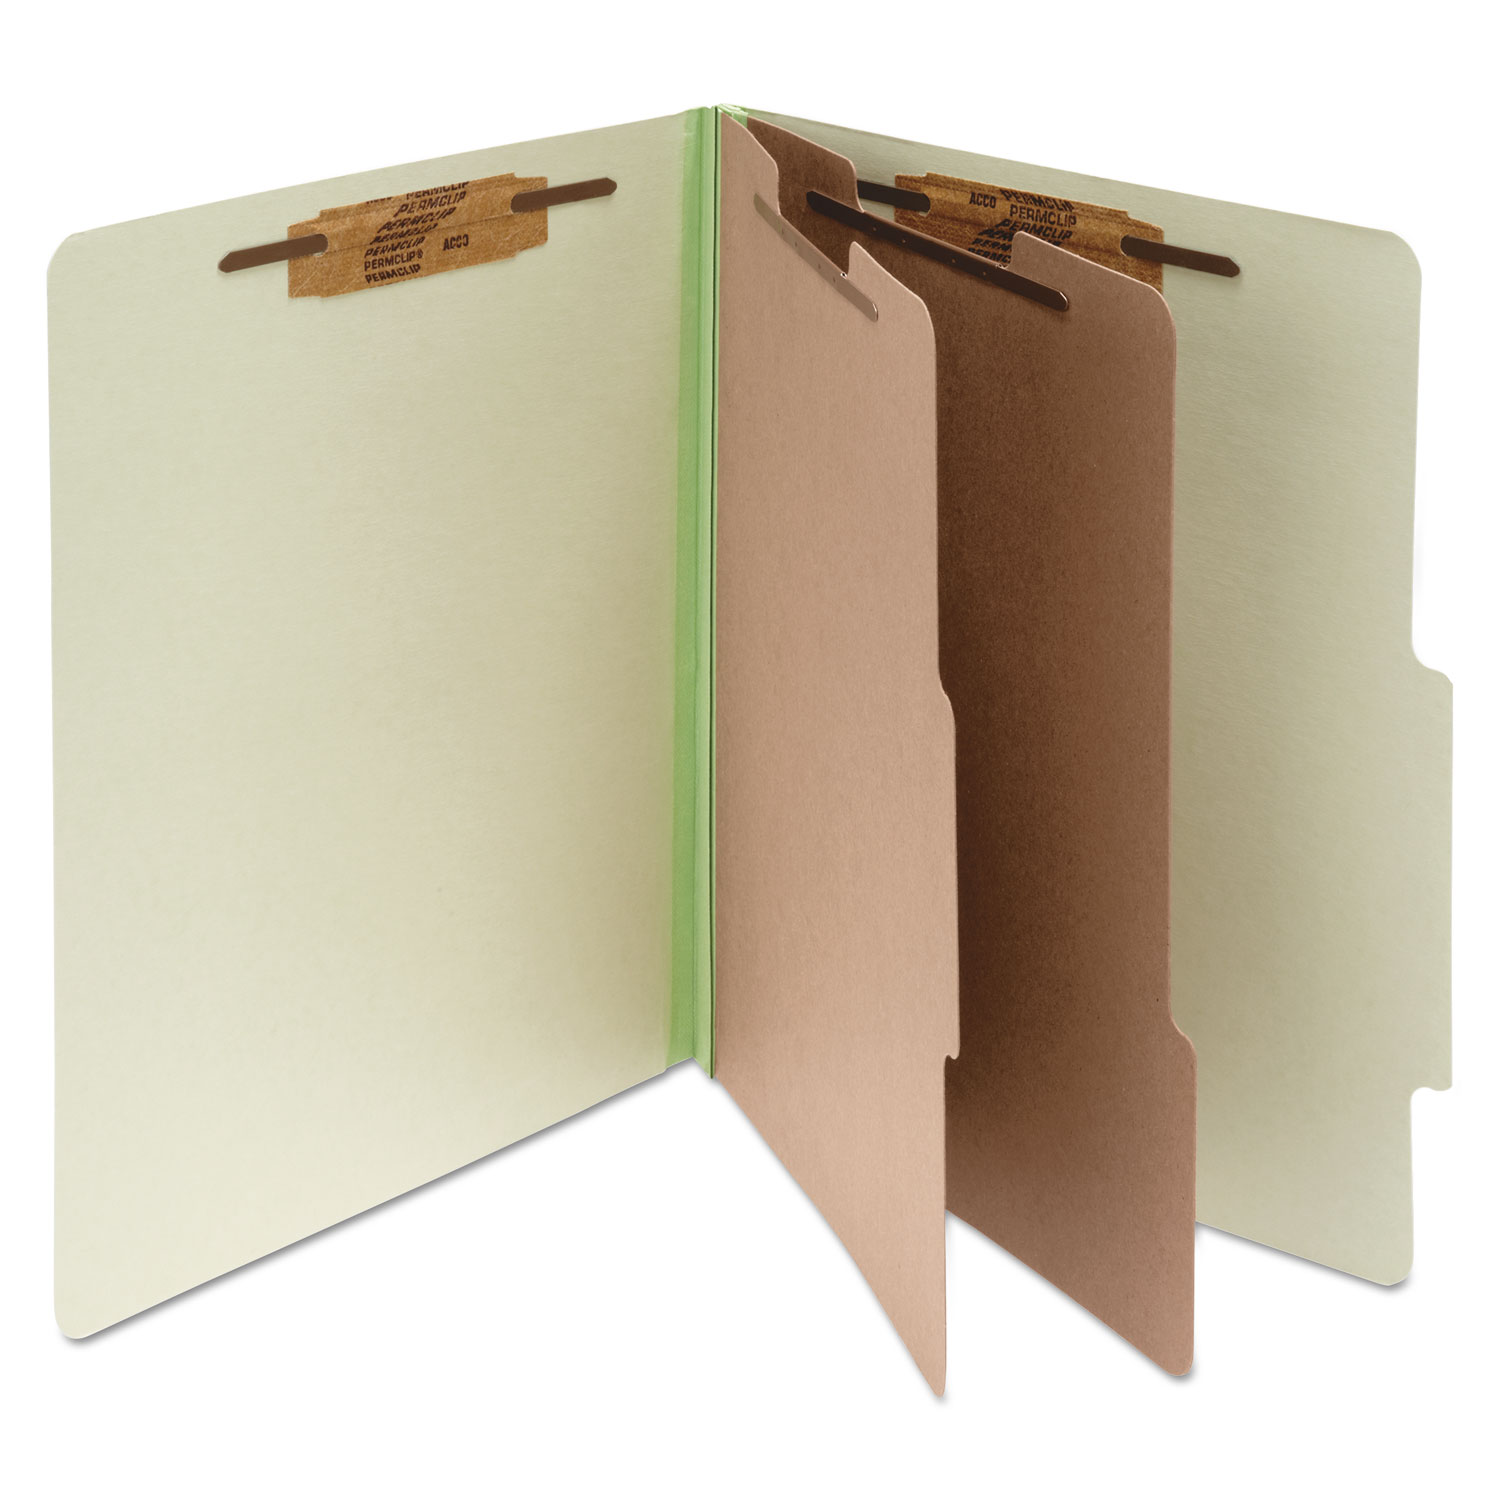  ACCO A7016046 Pressboard Classification Folders, 2 Dividers, Legal Size, Leaf Green, 10/Box (ACC16046) 